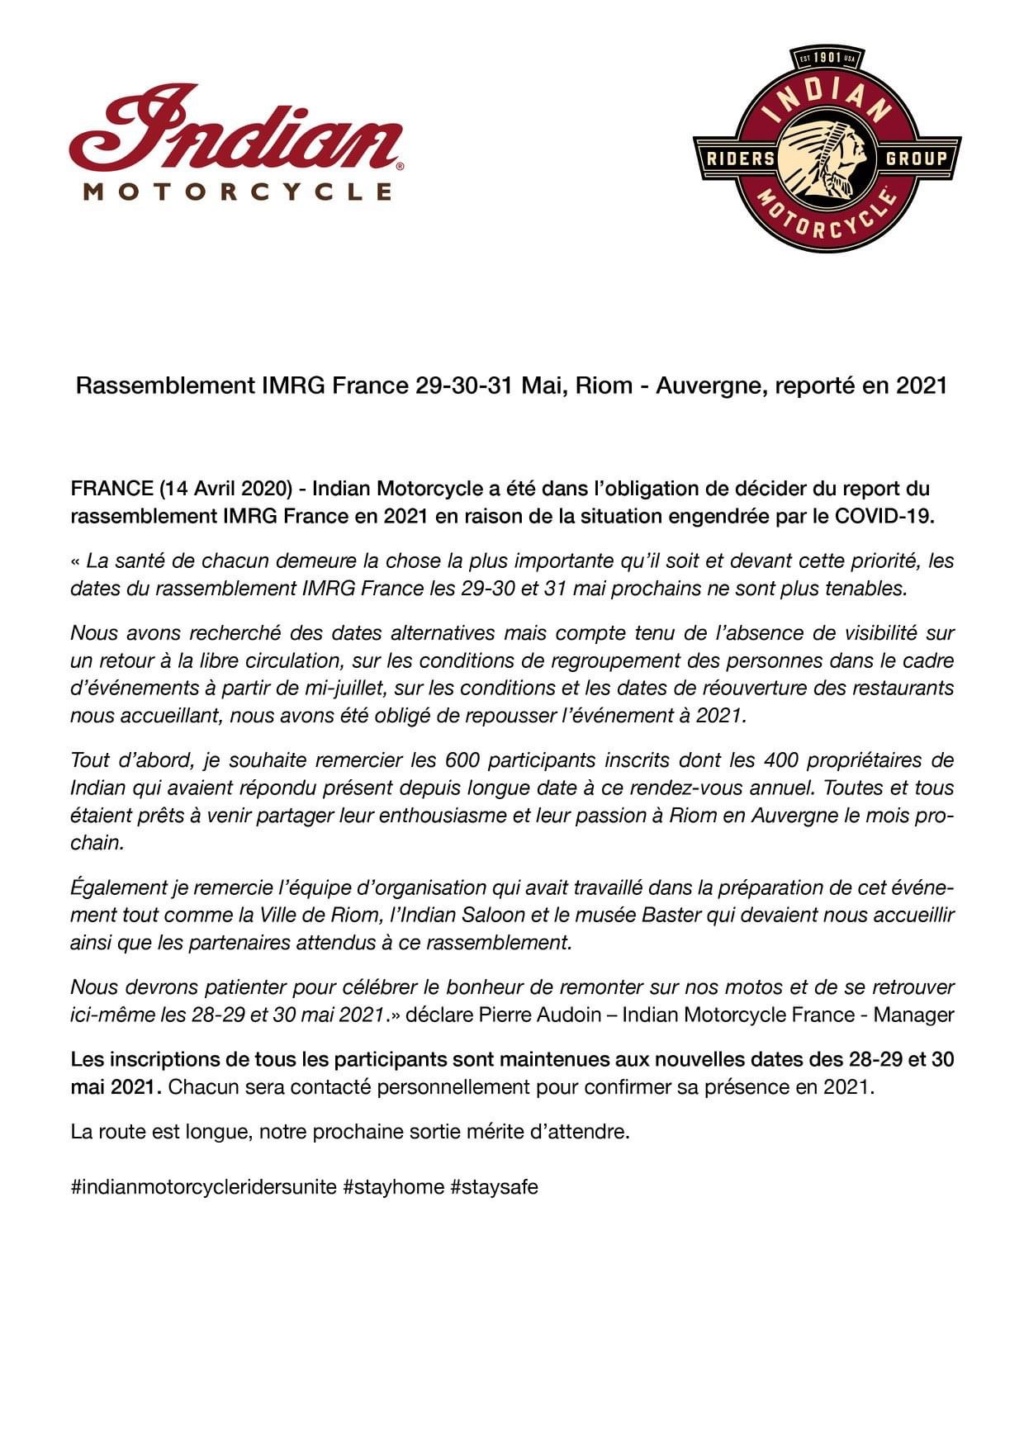 Rassemblement IMRG France 2020 fin Mai - Page 5 0b930710